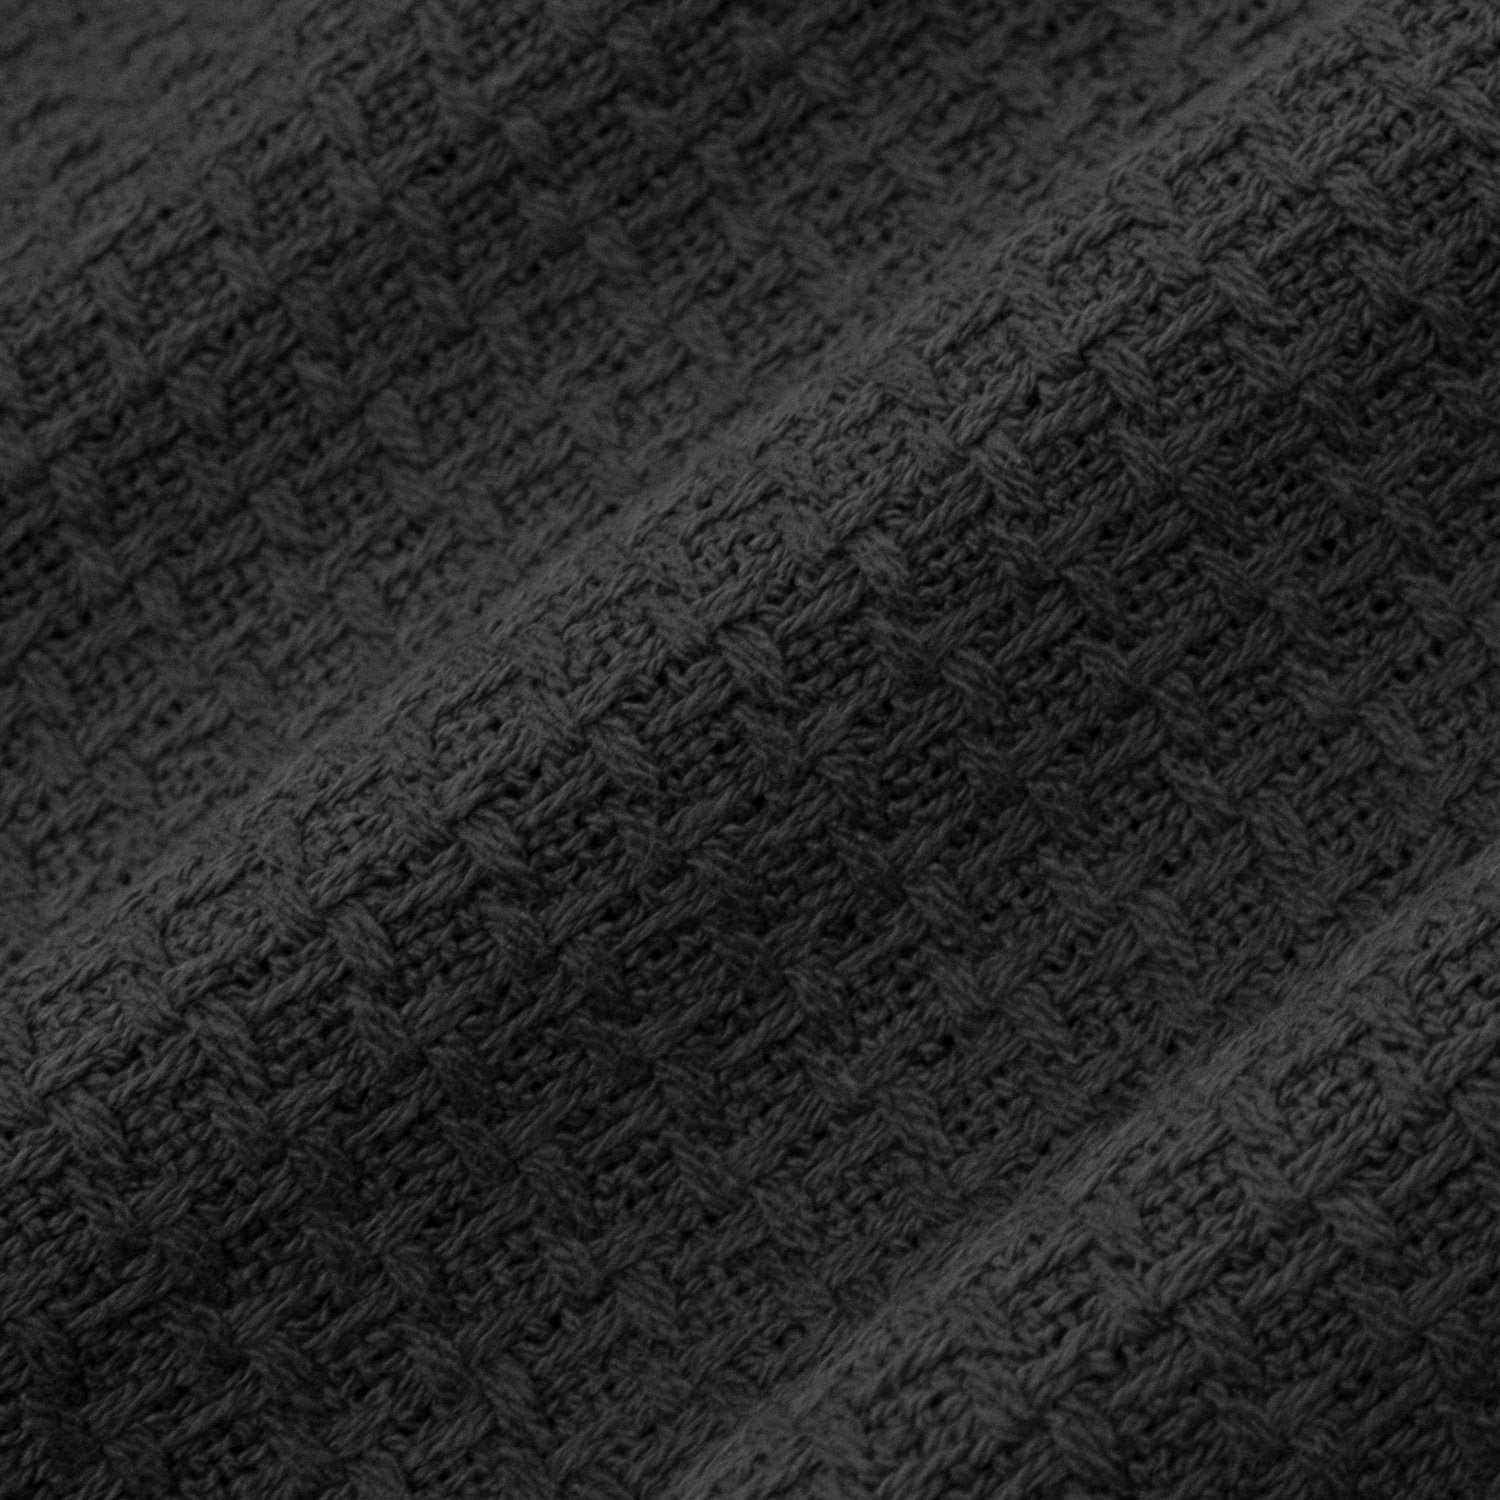 Basket Weave Cotton Blanket Black - Fabric